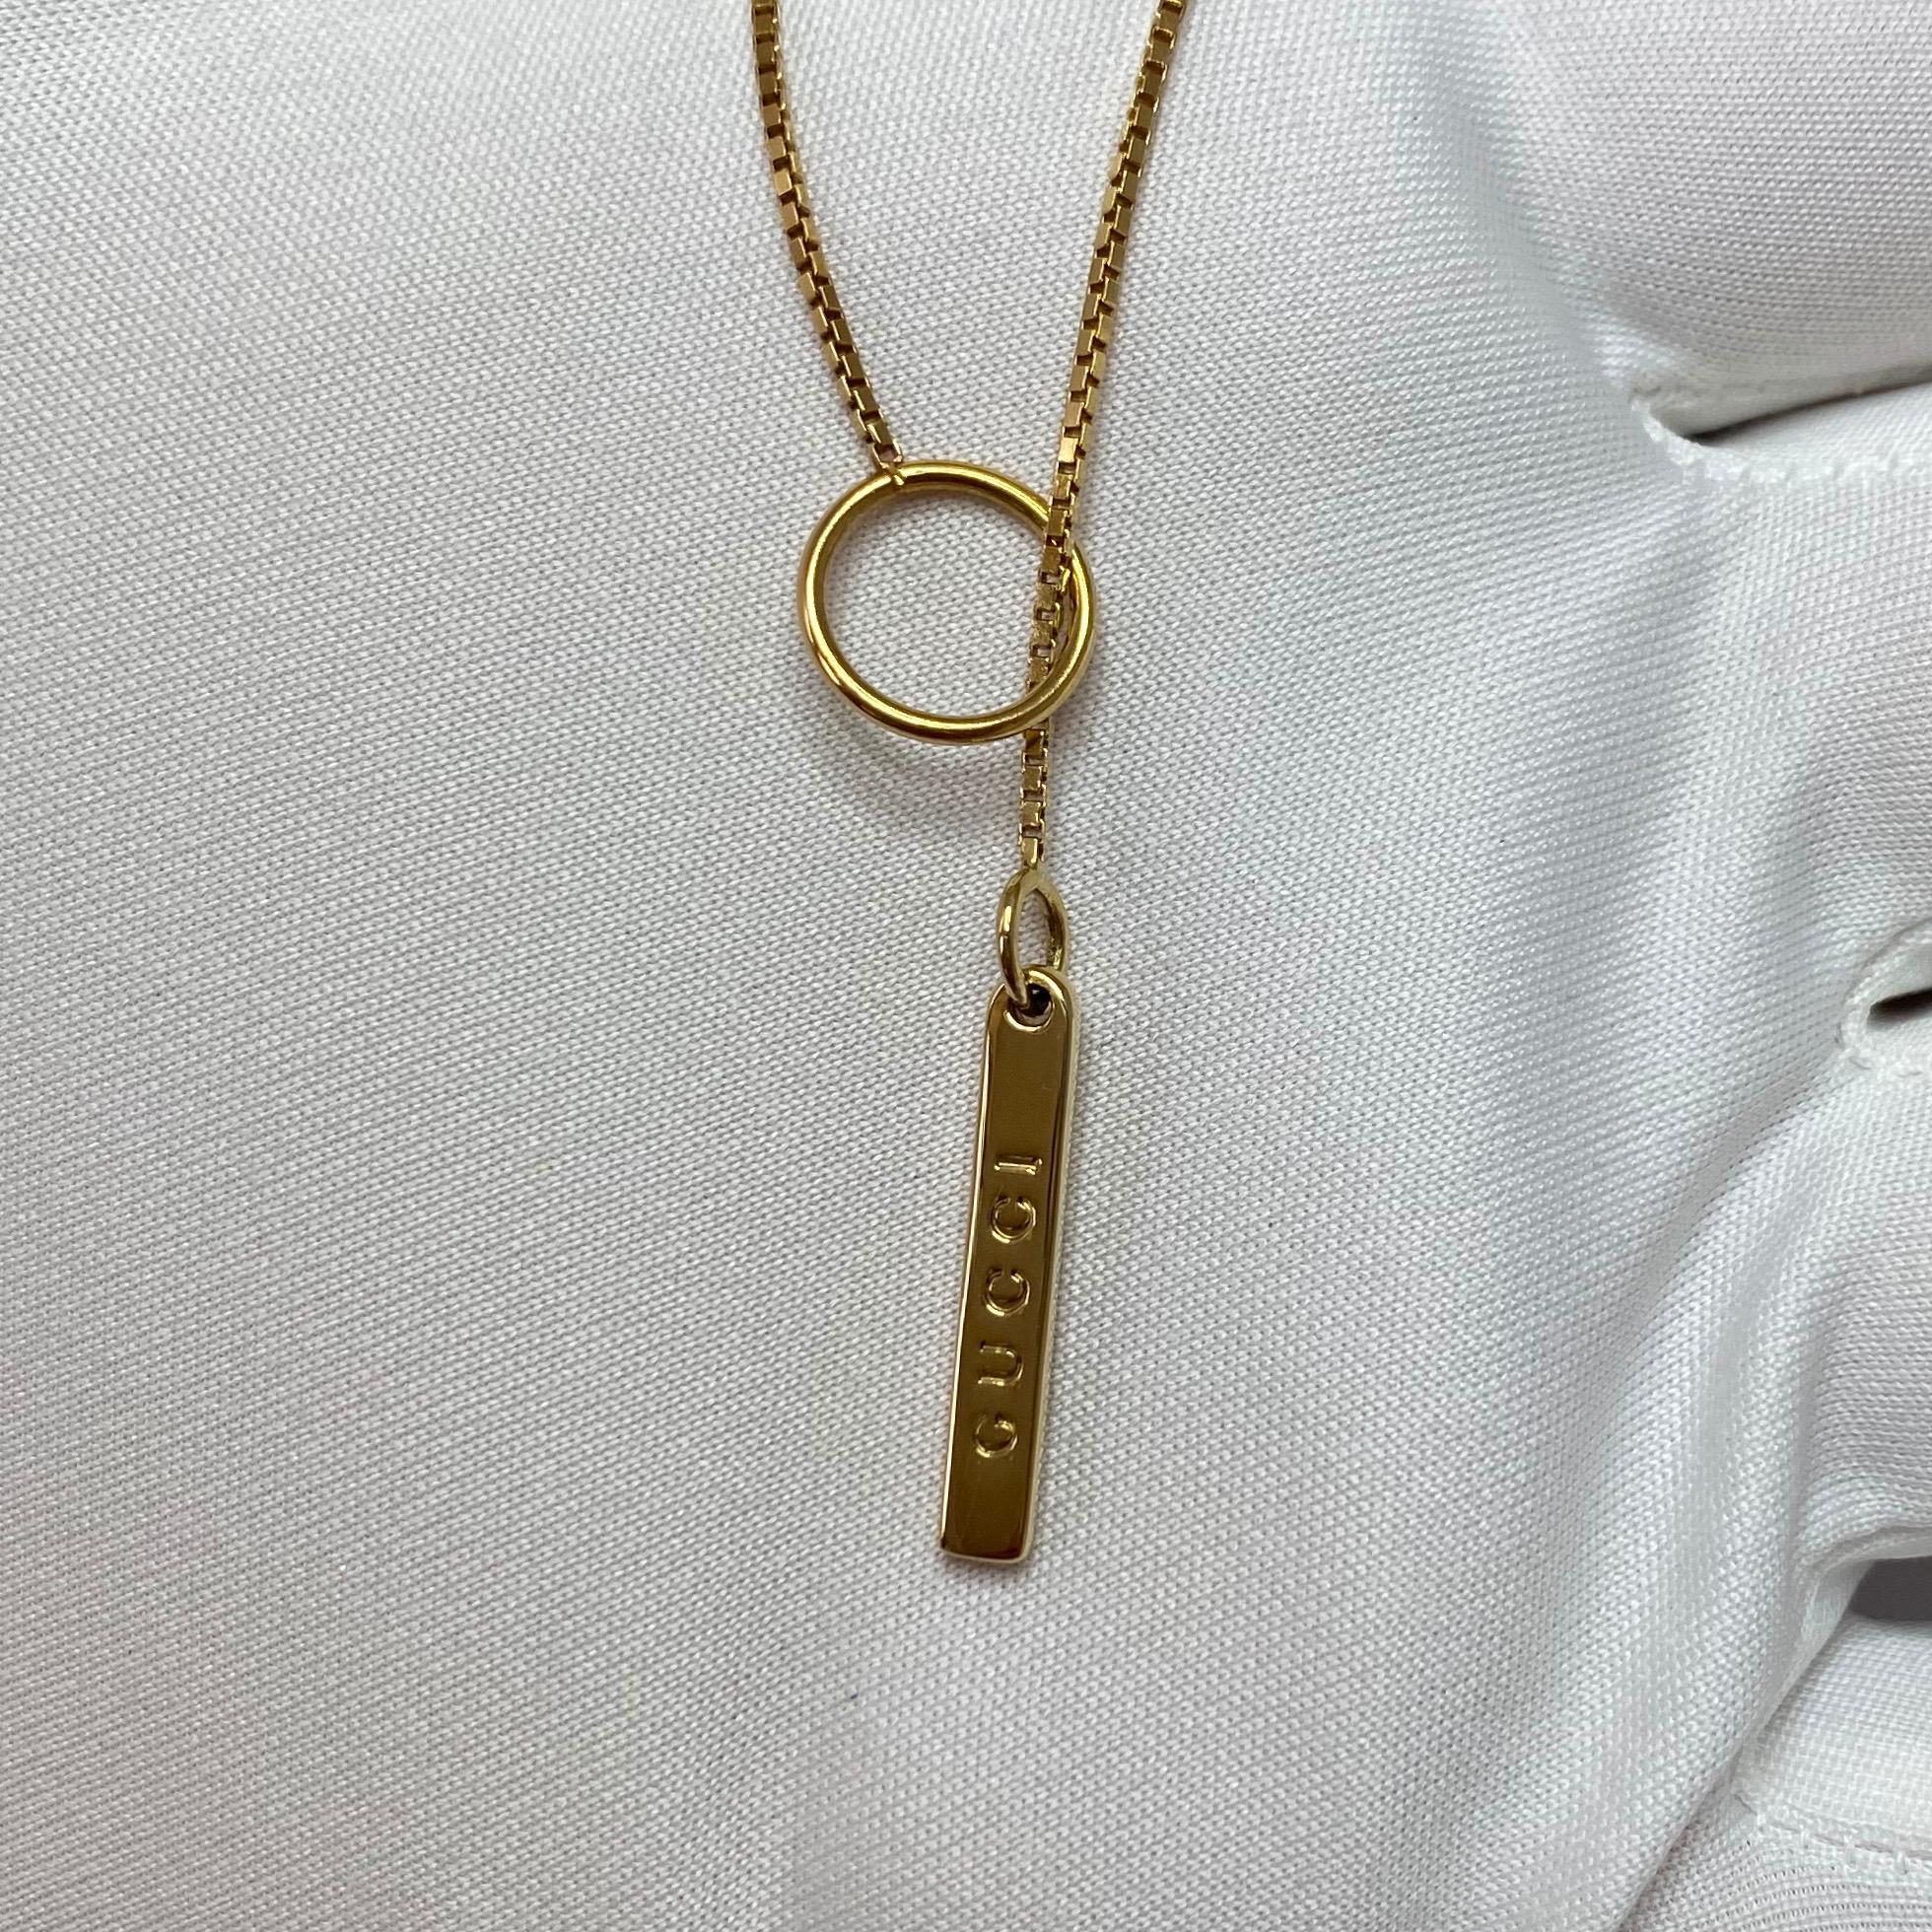 Gucci 18 Karat Yellow Gold Bar Lariat Pendant Necklace with Original Gucci Box 3